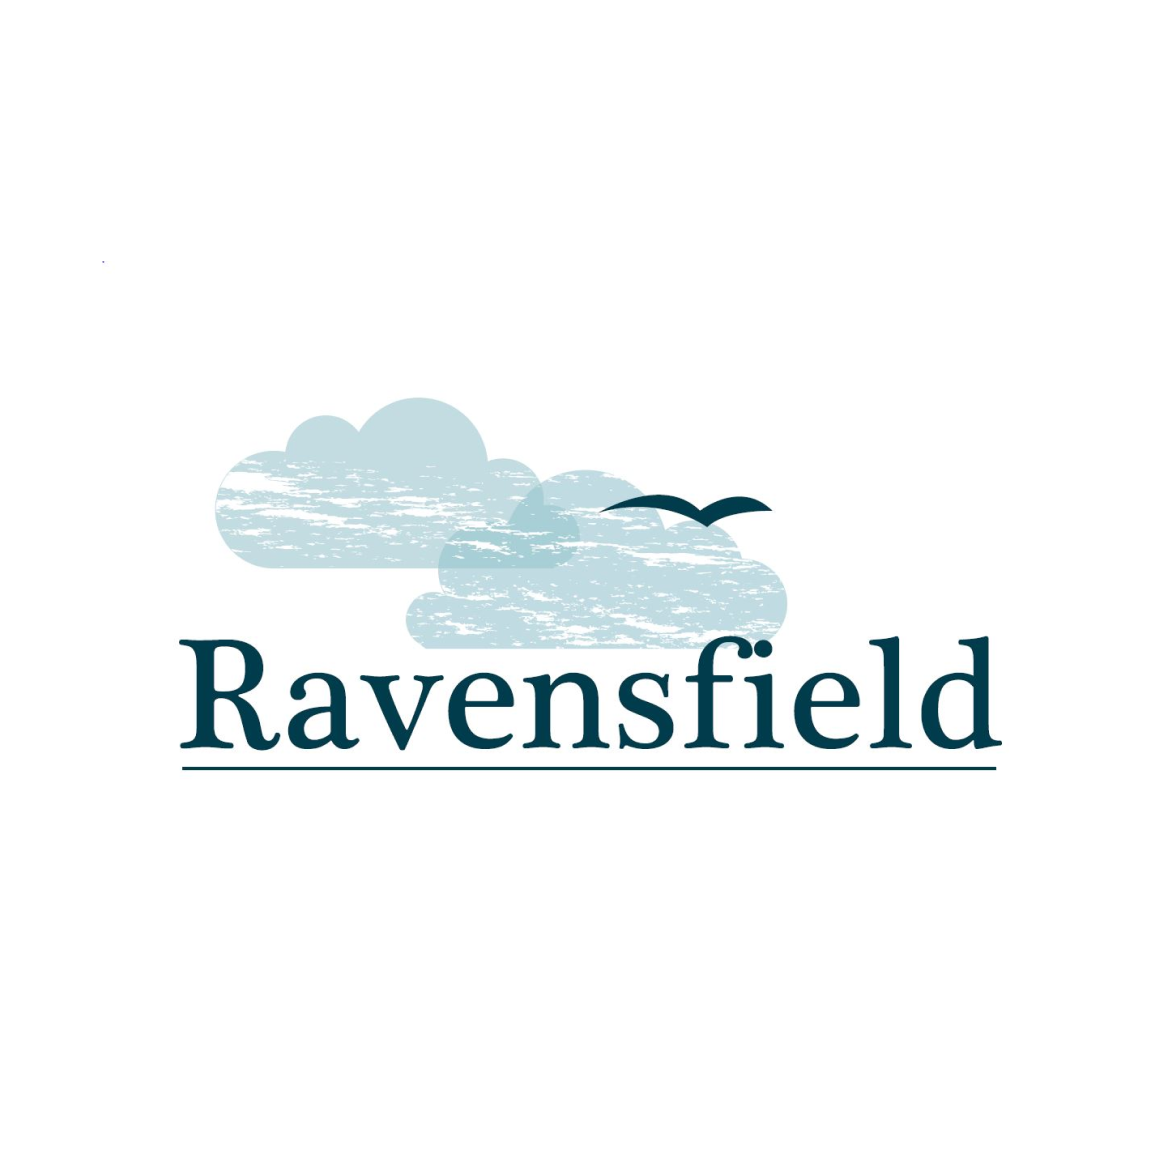 Ravensfield at Farley